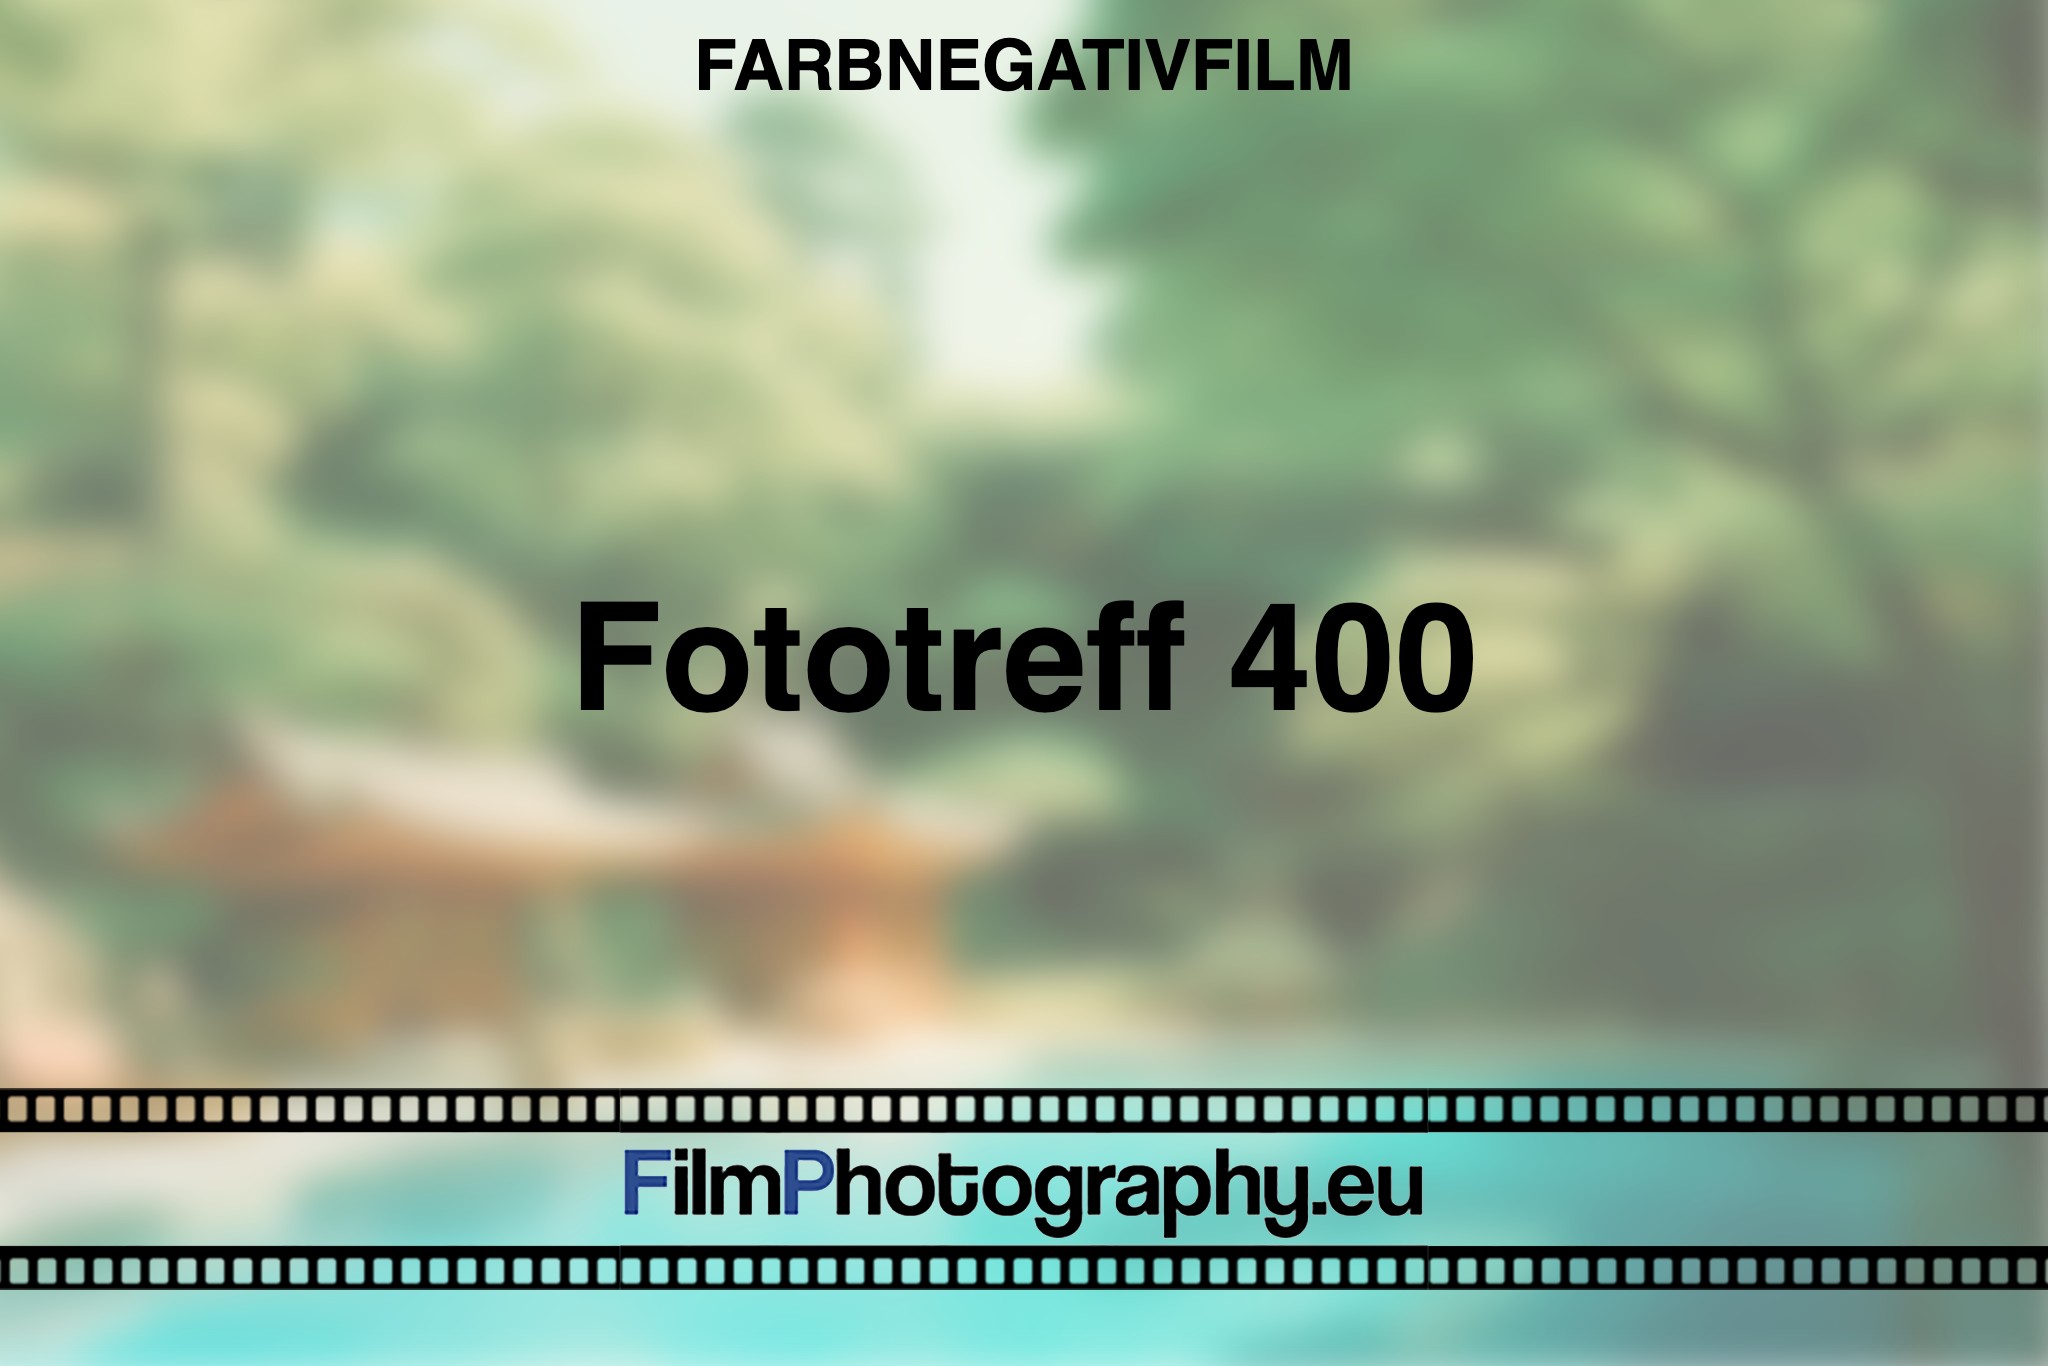 fototreff-400-farbnegativfilm-bnv